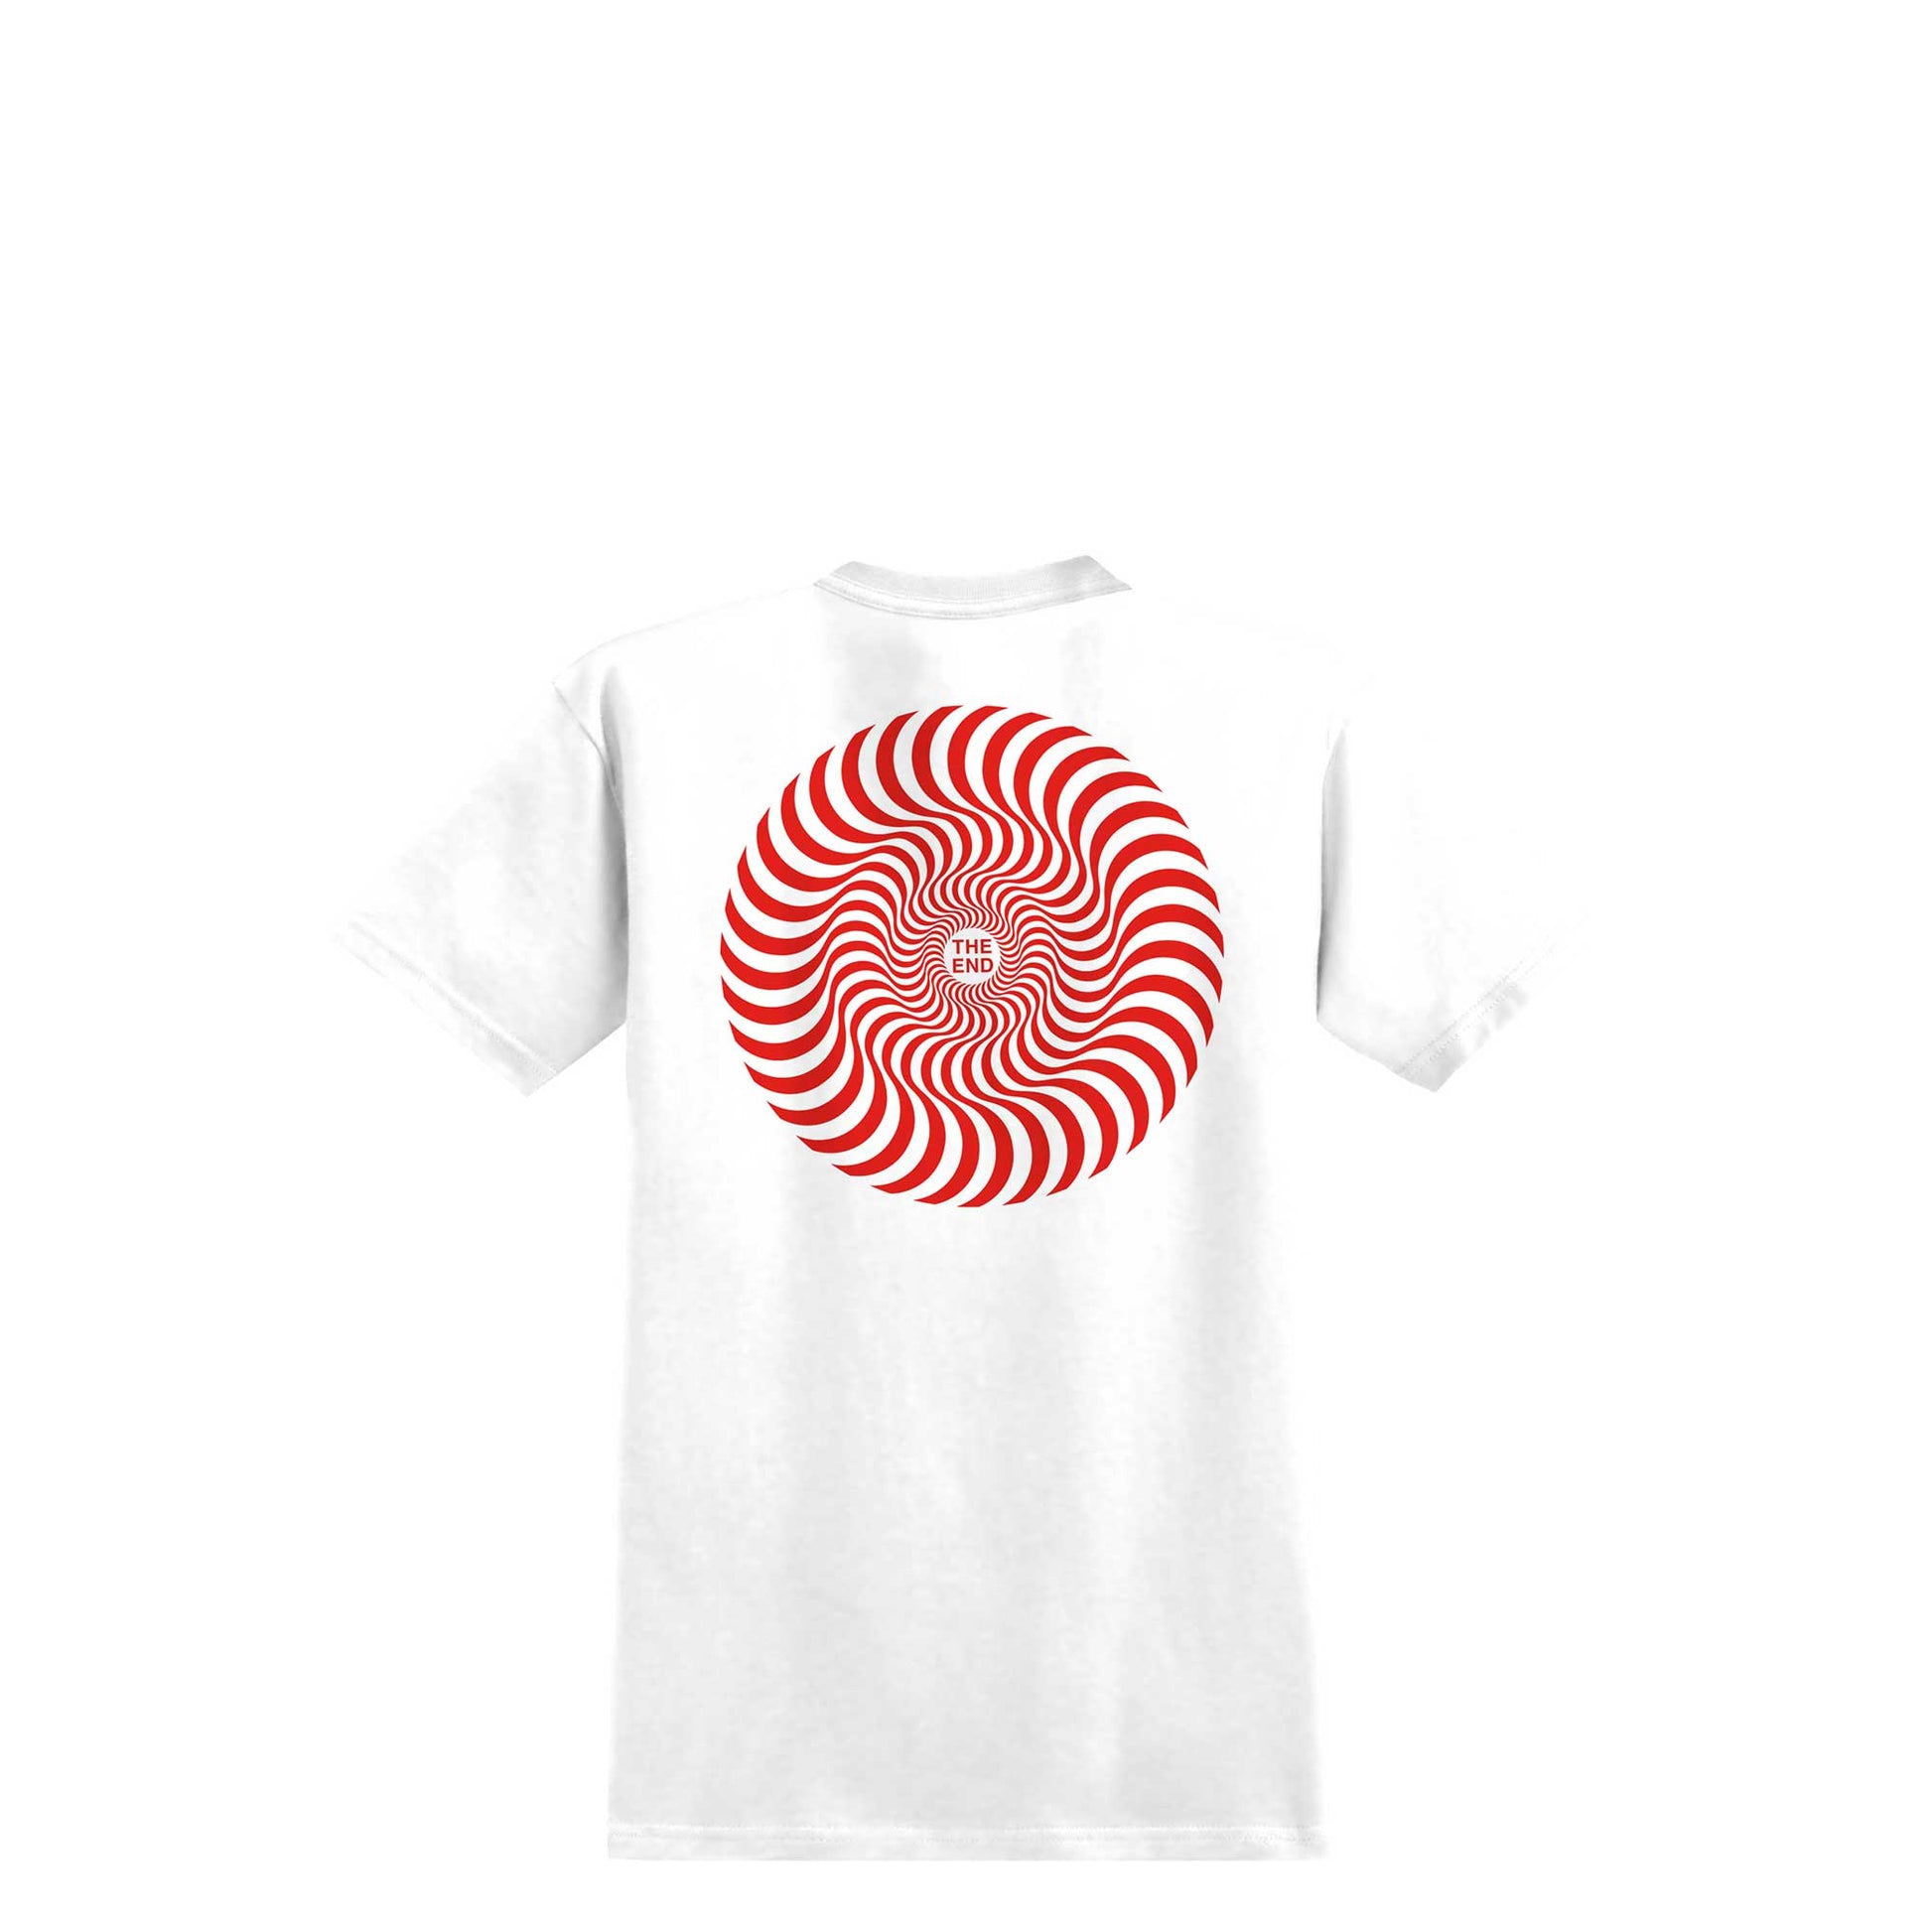 Spitfire Classic Swirl S/S T-Shirt, white w/ red prints - Tiki Room Skateboards - 1